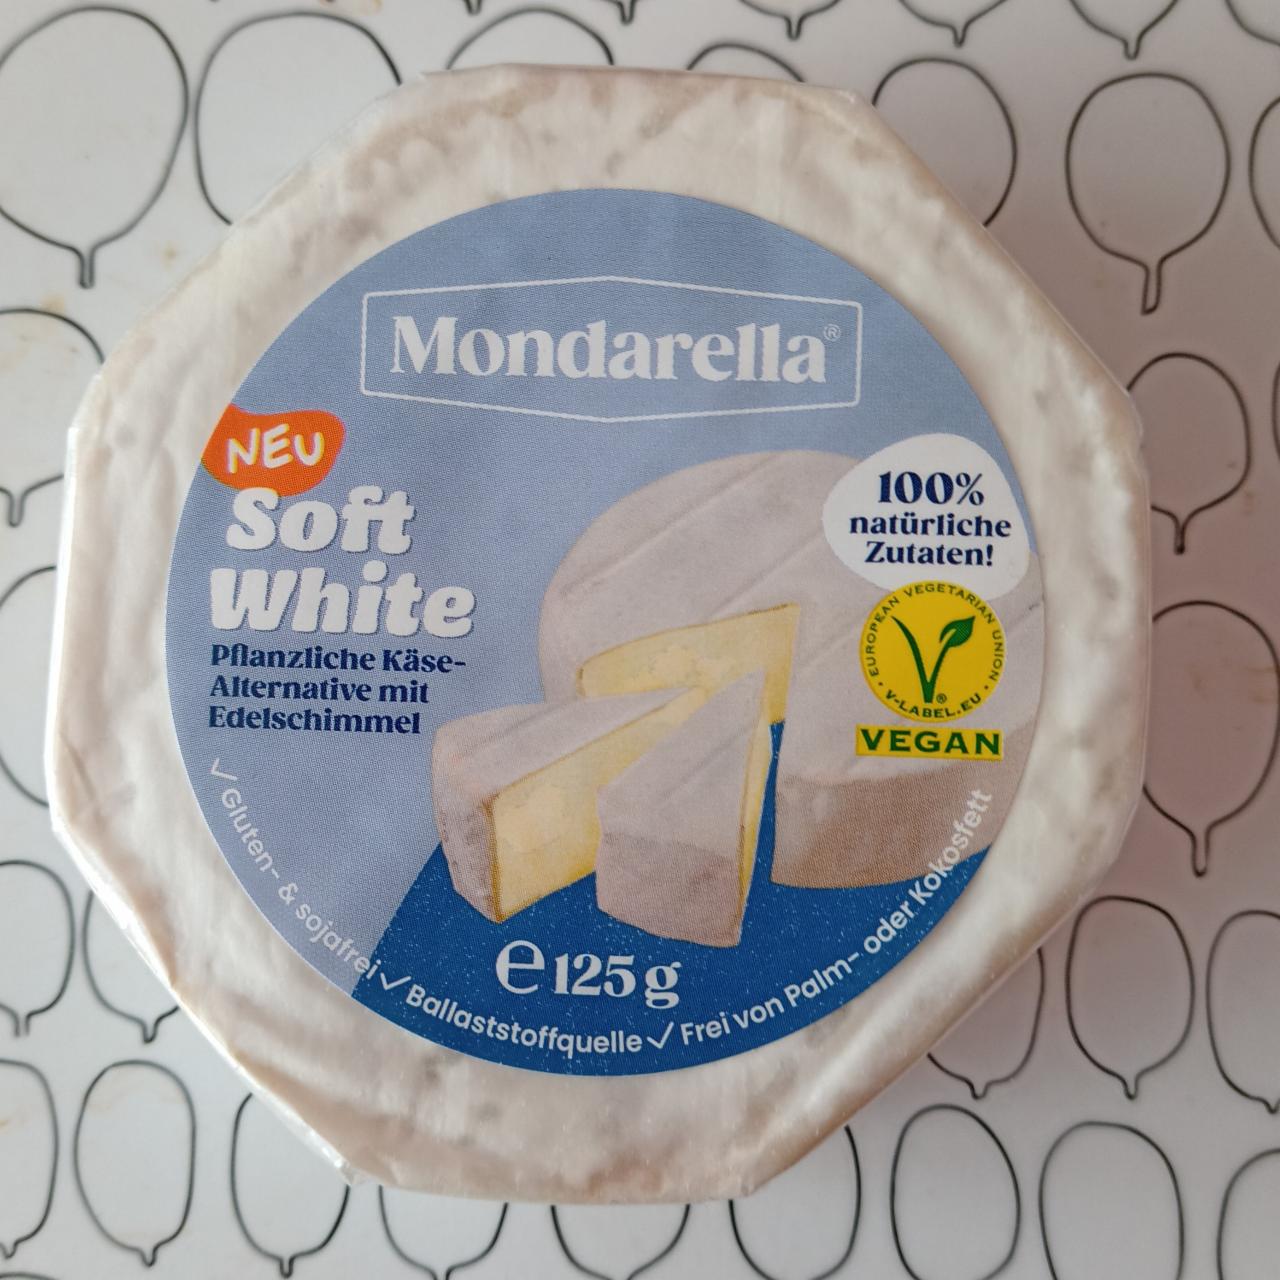 Fotografie - Soft White pflanzliche Käse Mondarella